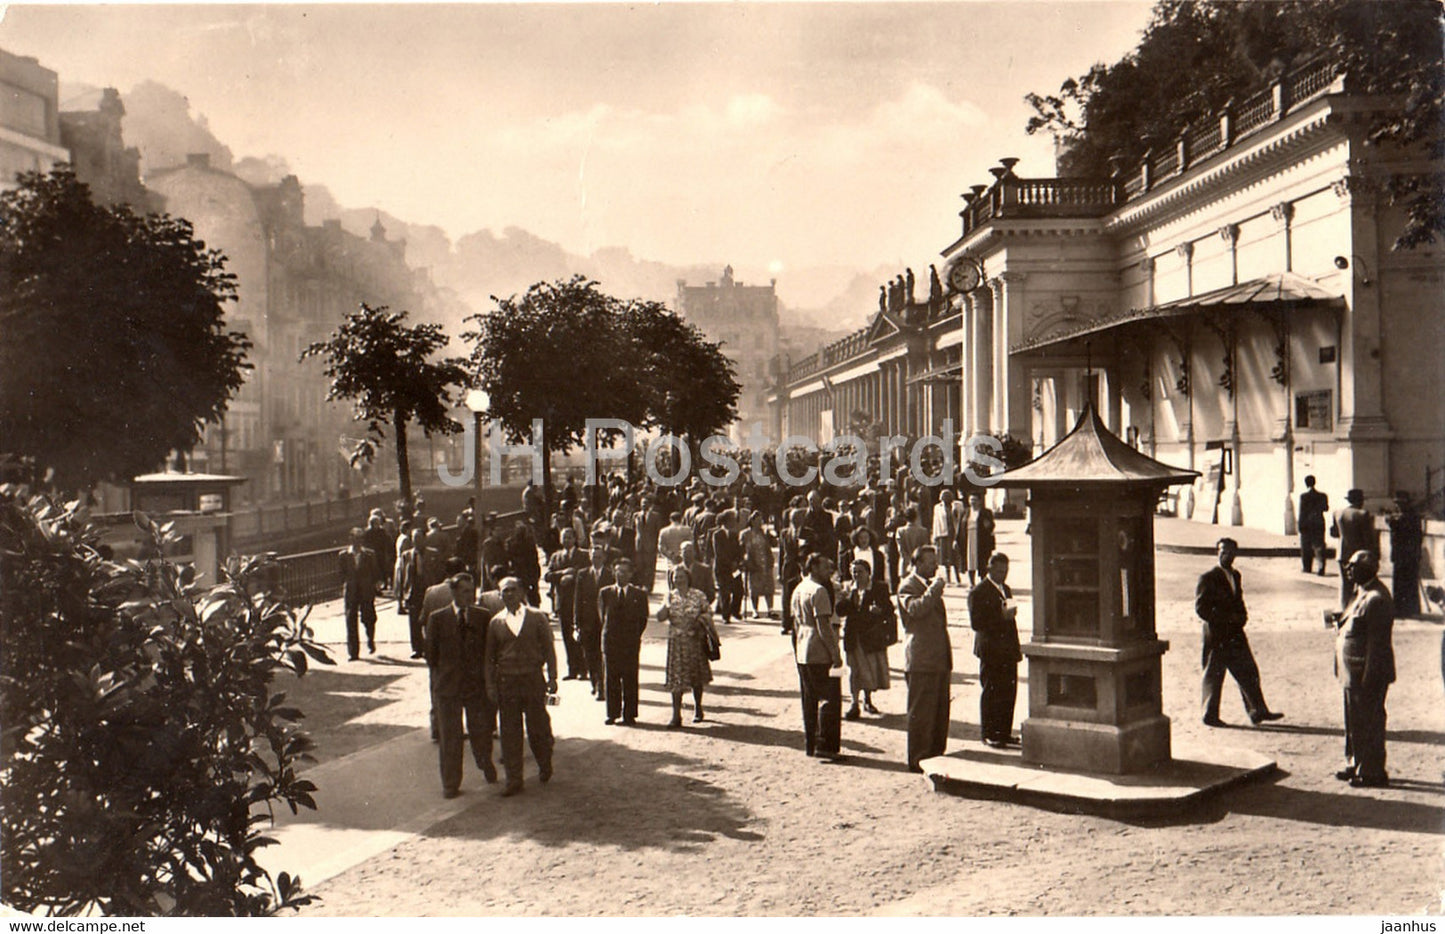 Karlovy Vary - Karlsbad - kolonada - Colonnade - old postcard - 1954 - Czechoslovakia - Czech Republic - used - JH Postcards